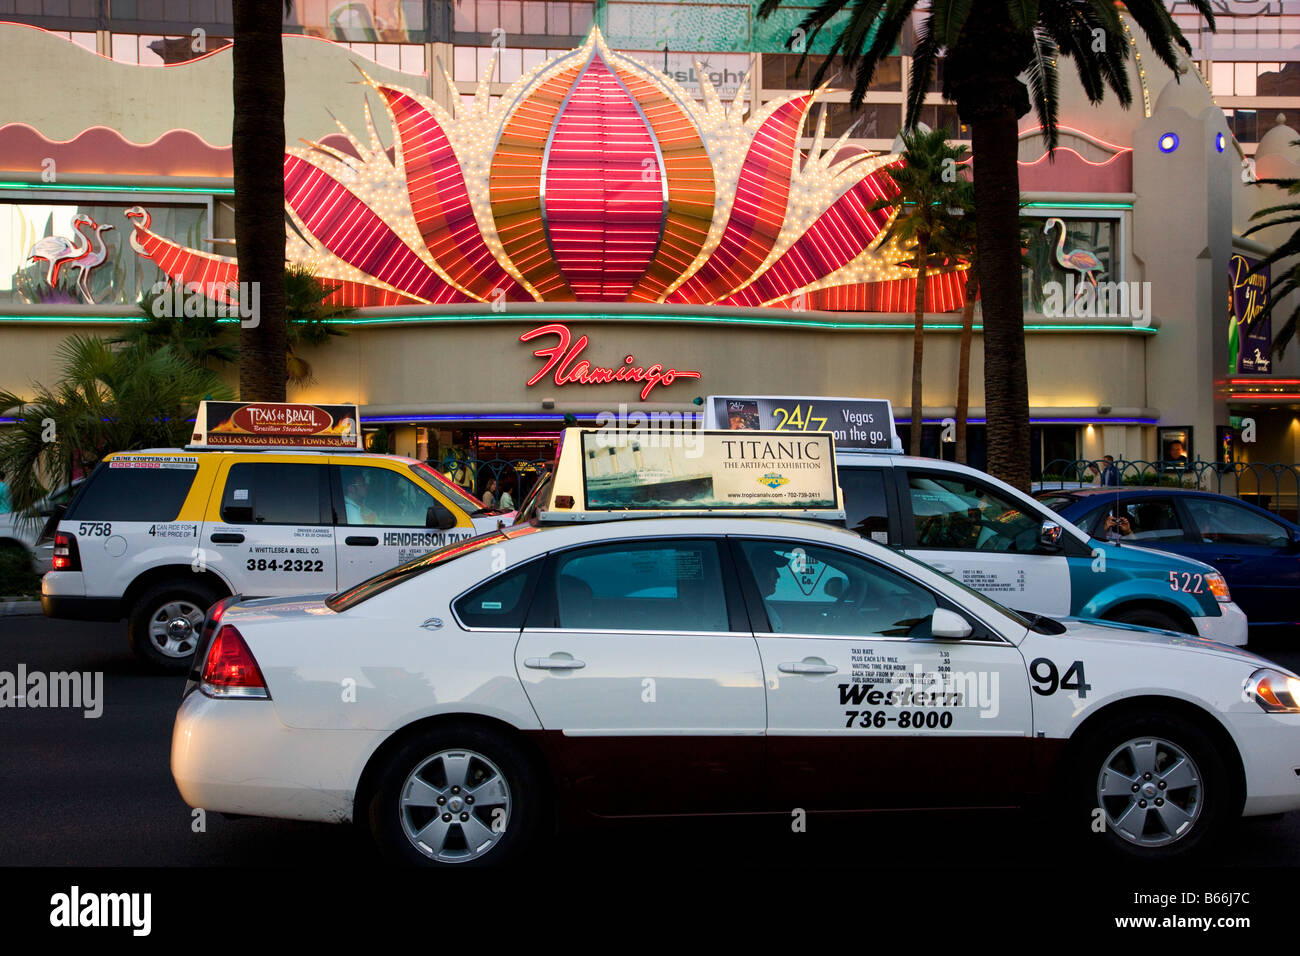 The Flamingo Hotel and Casino Las Vegas Nevada Stock Photo